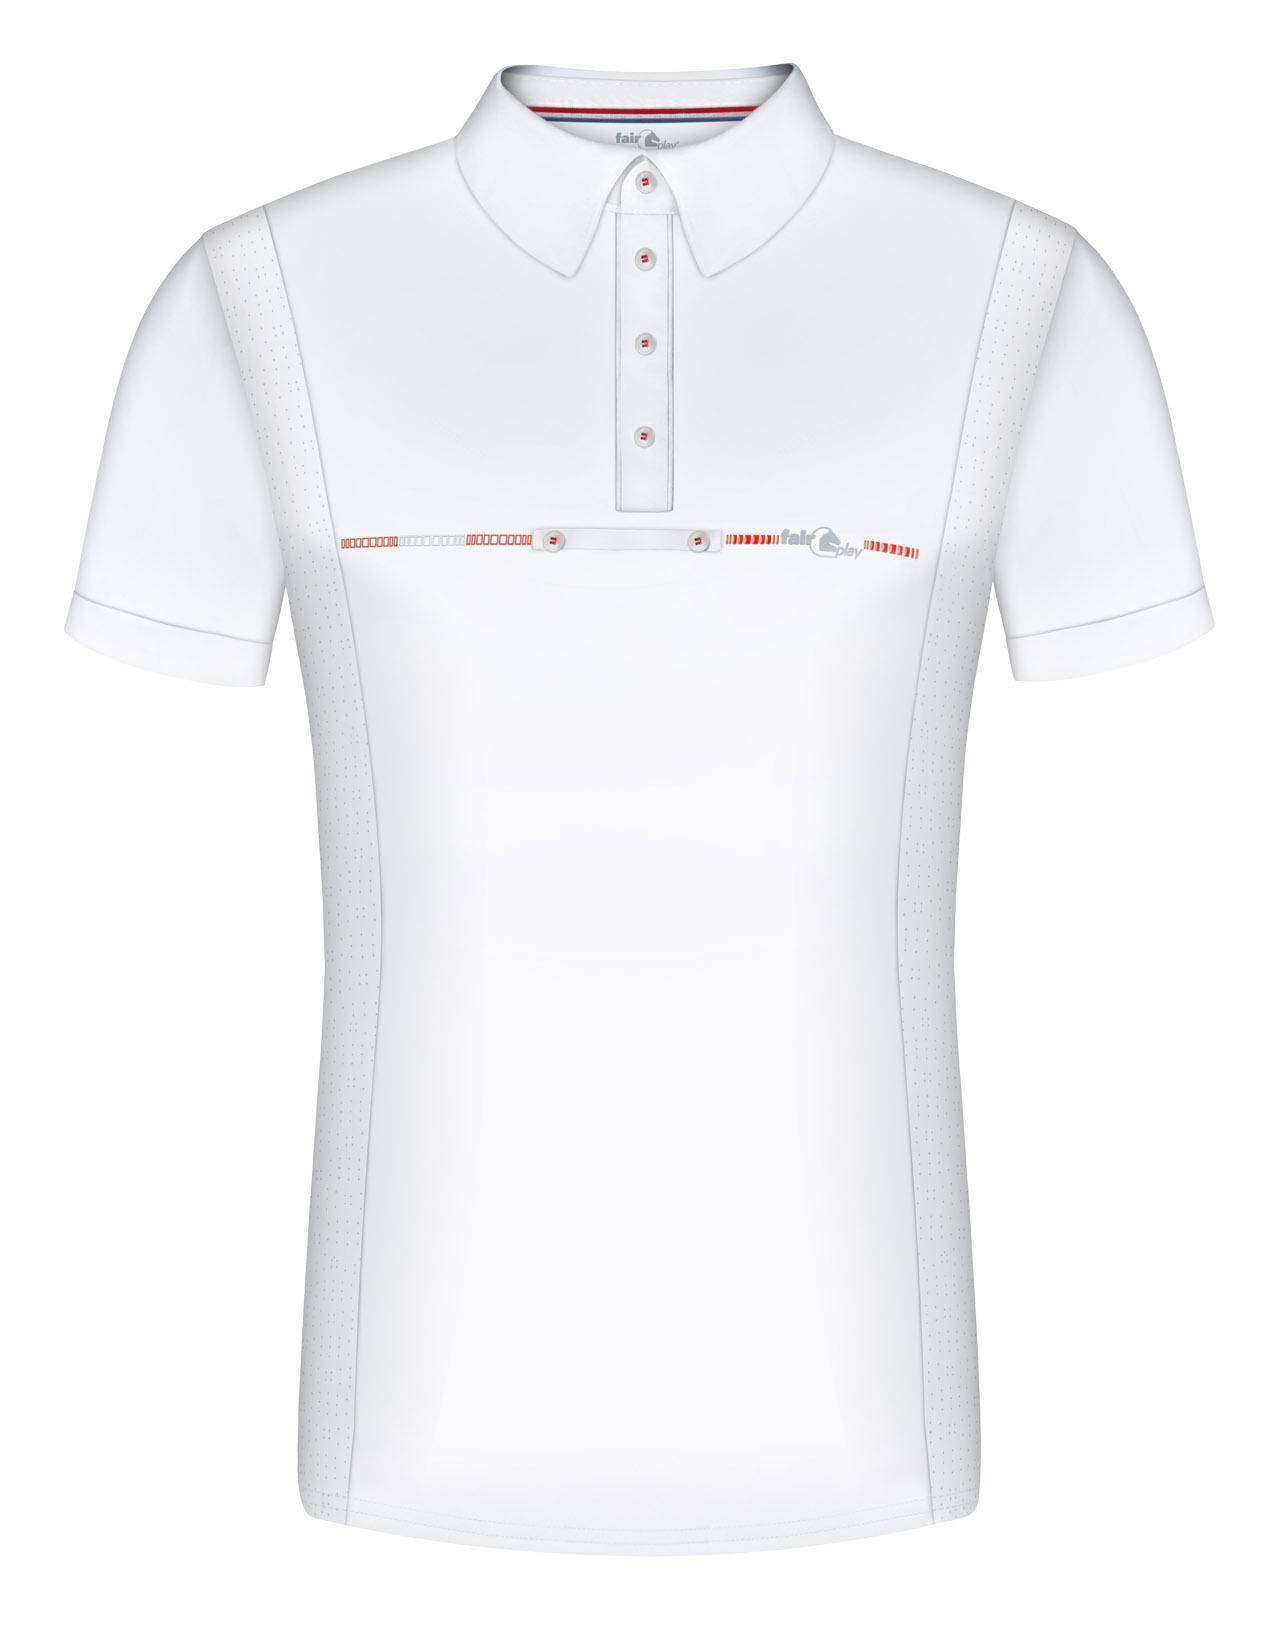 Koszulka konkursowa FP DAVID biały  54